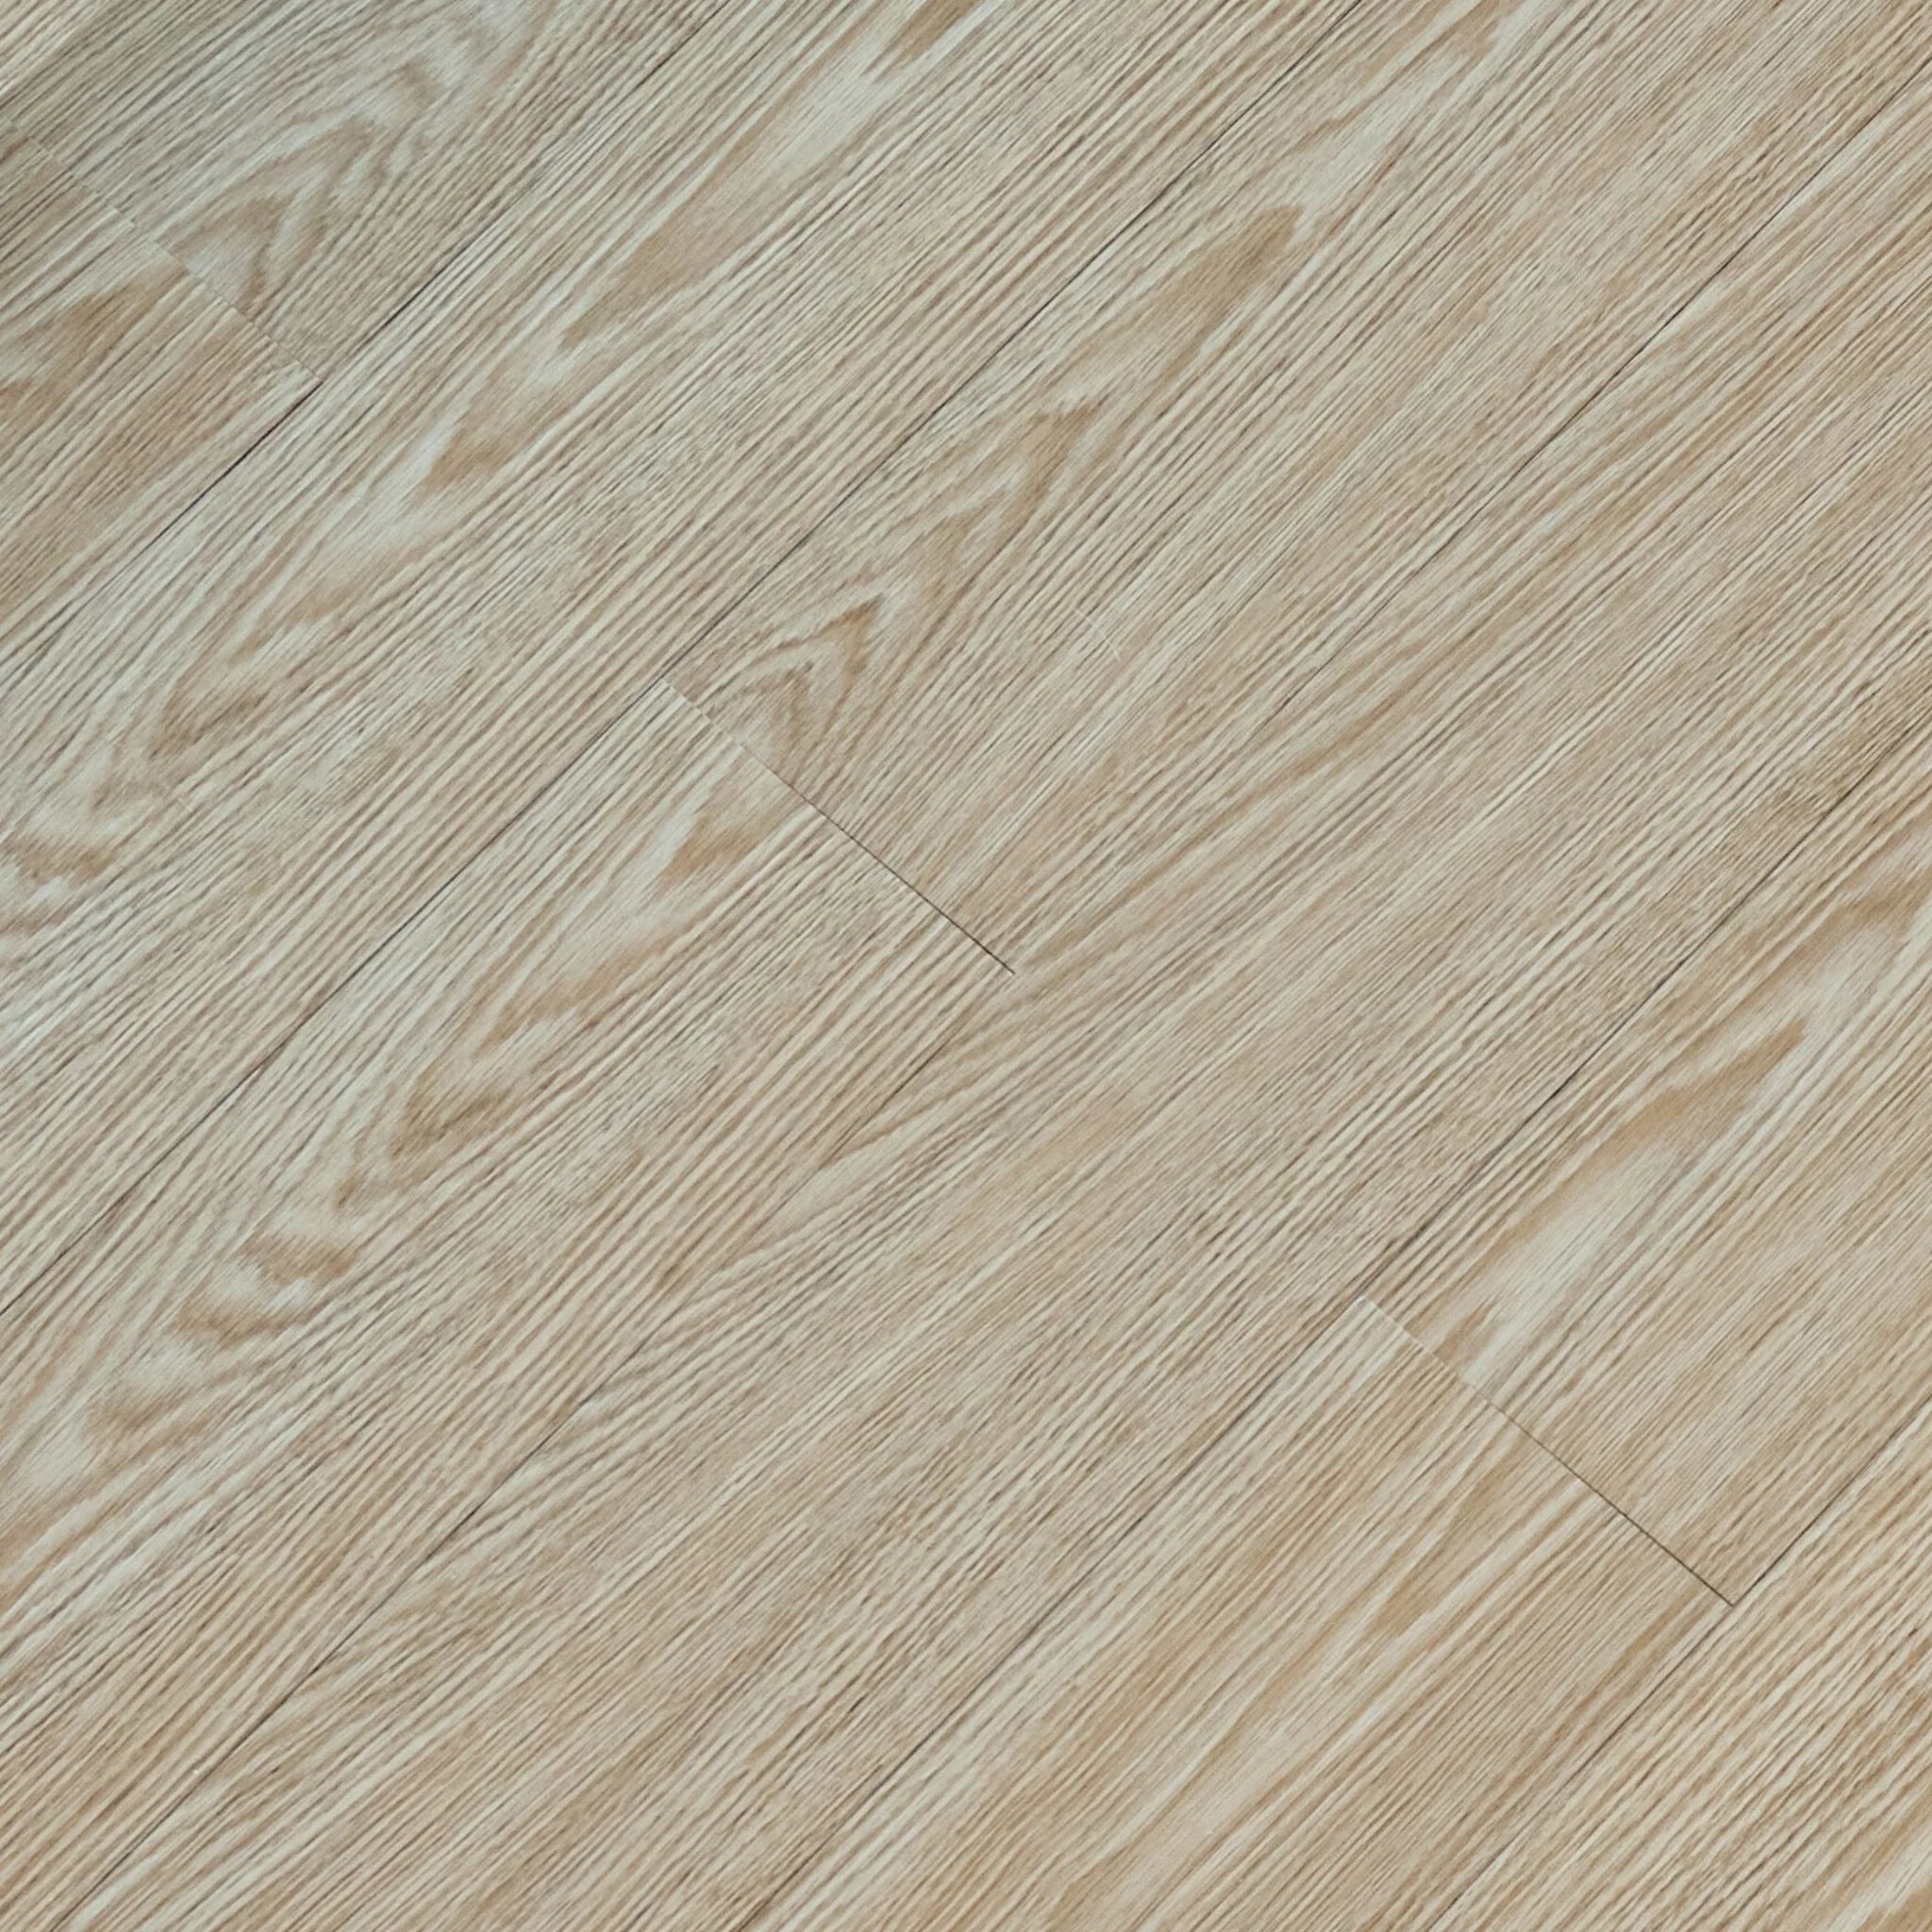 close-up of a wood-effect vinyl plank in light beige with grey undertones